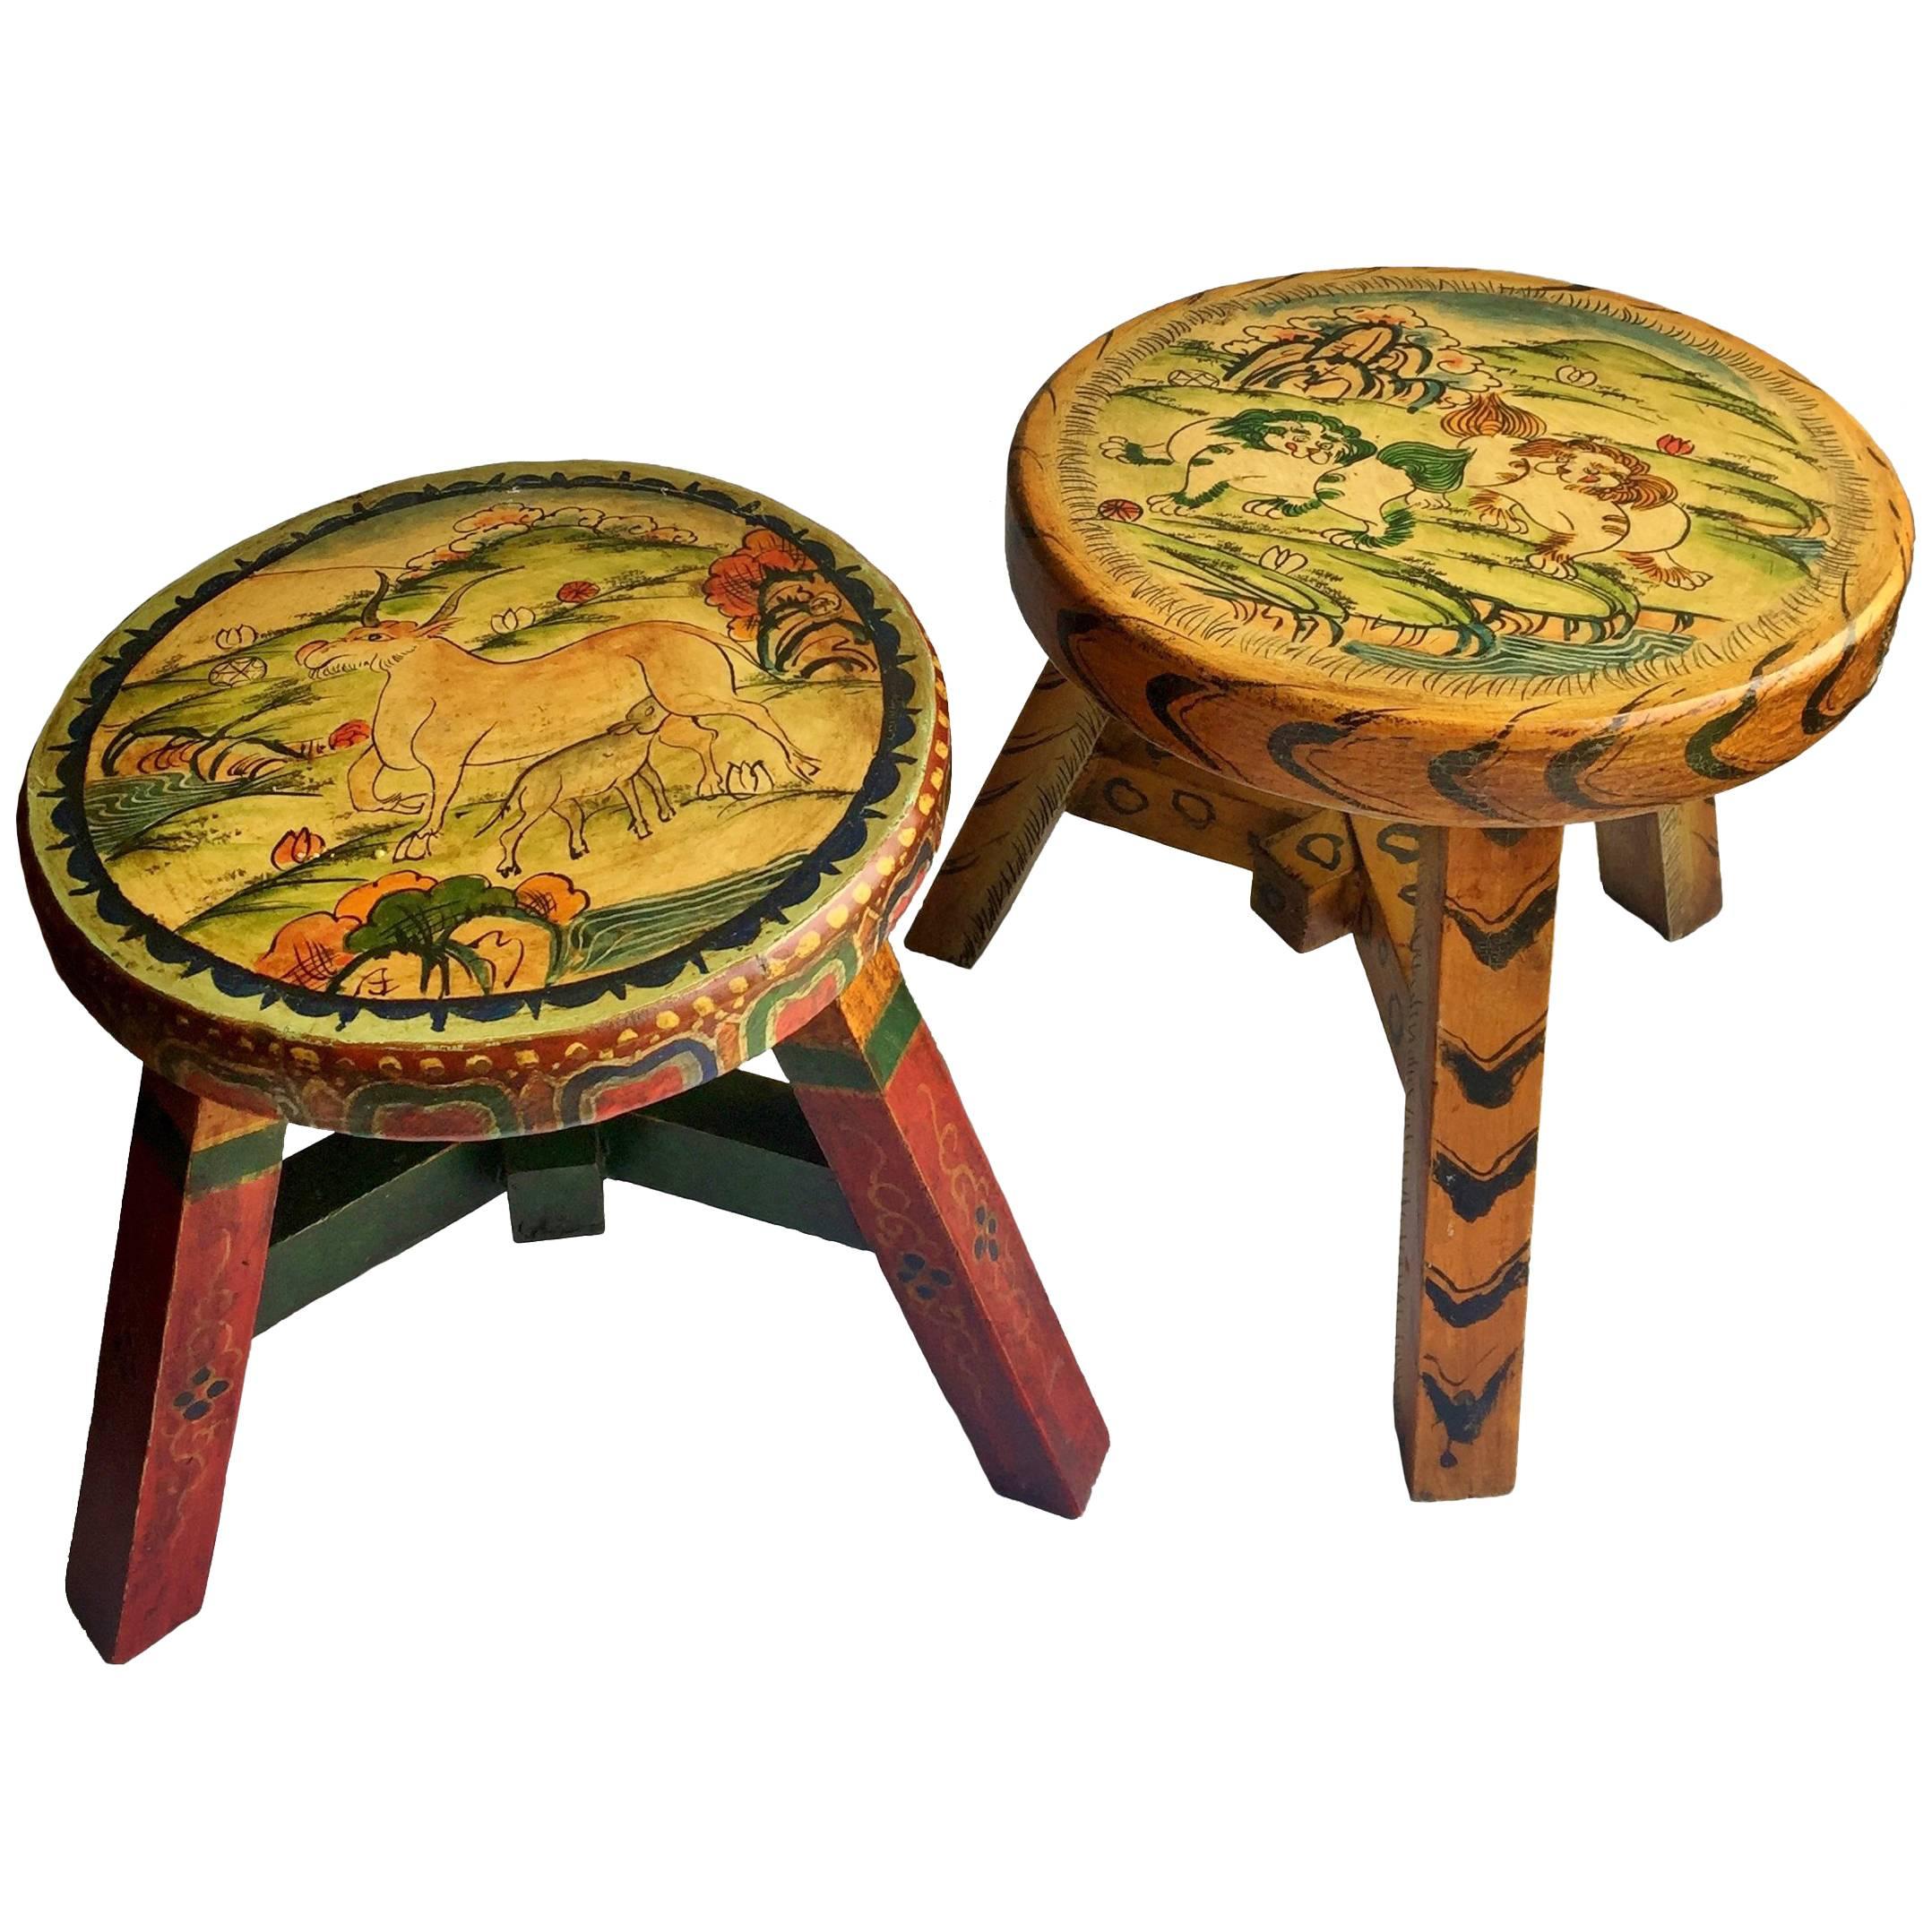 Pair of Tibetan Stools, Hand-Painted